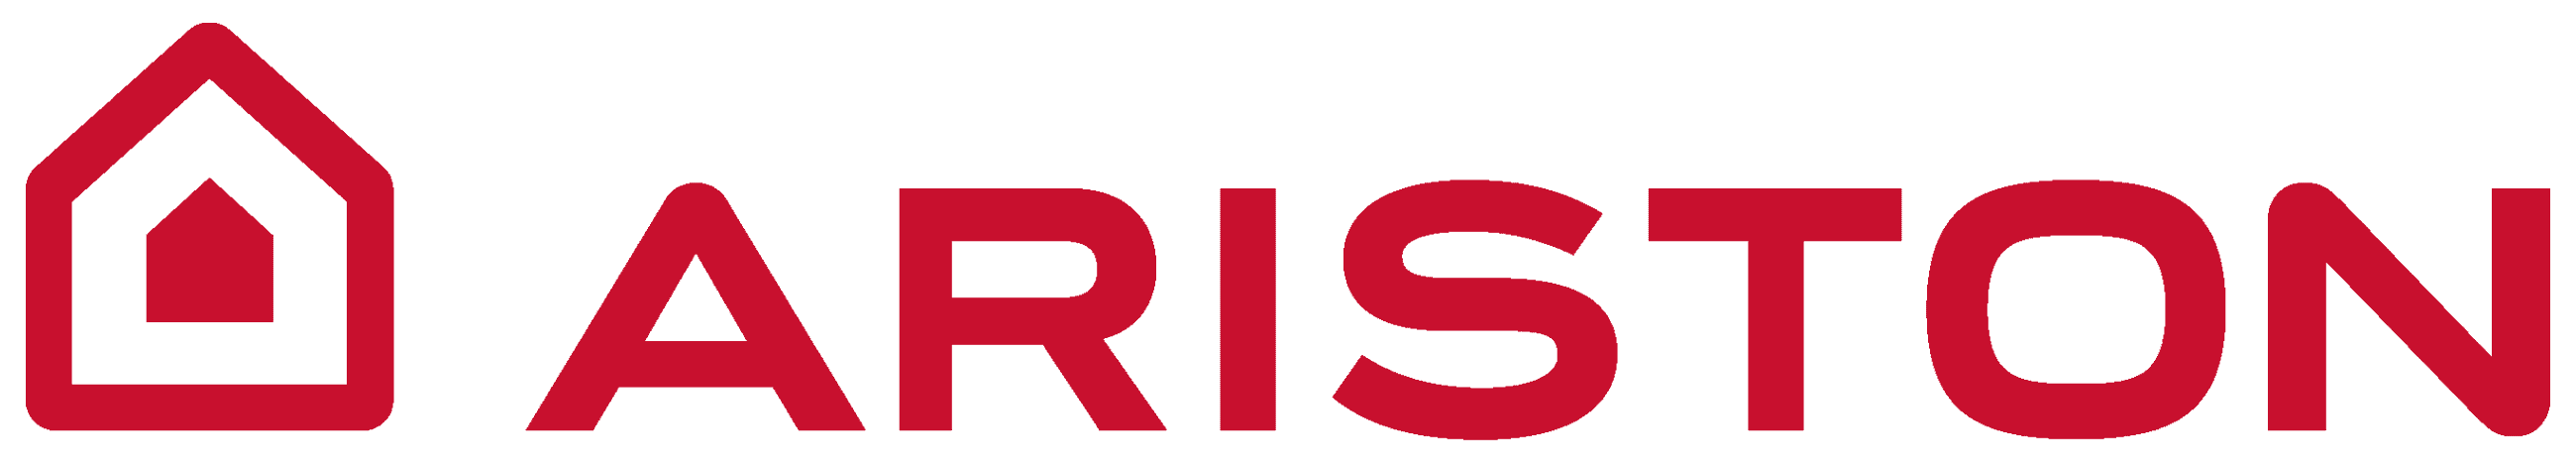 Ariston-logo-e1706245077820.png